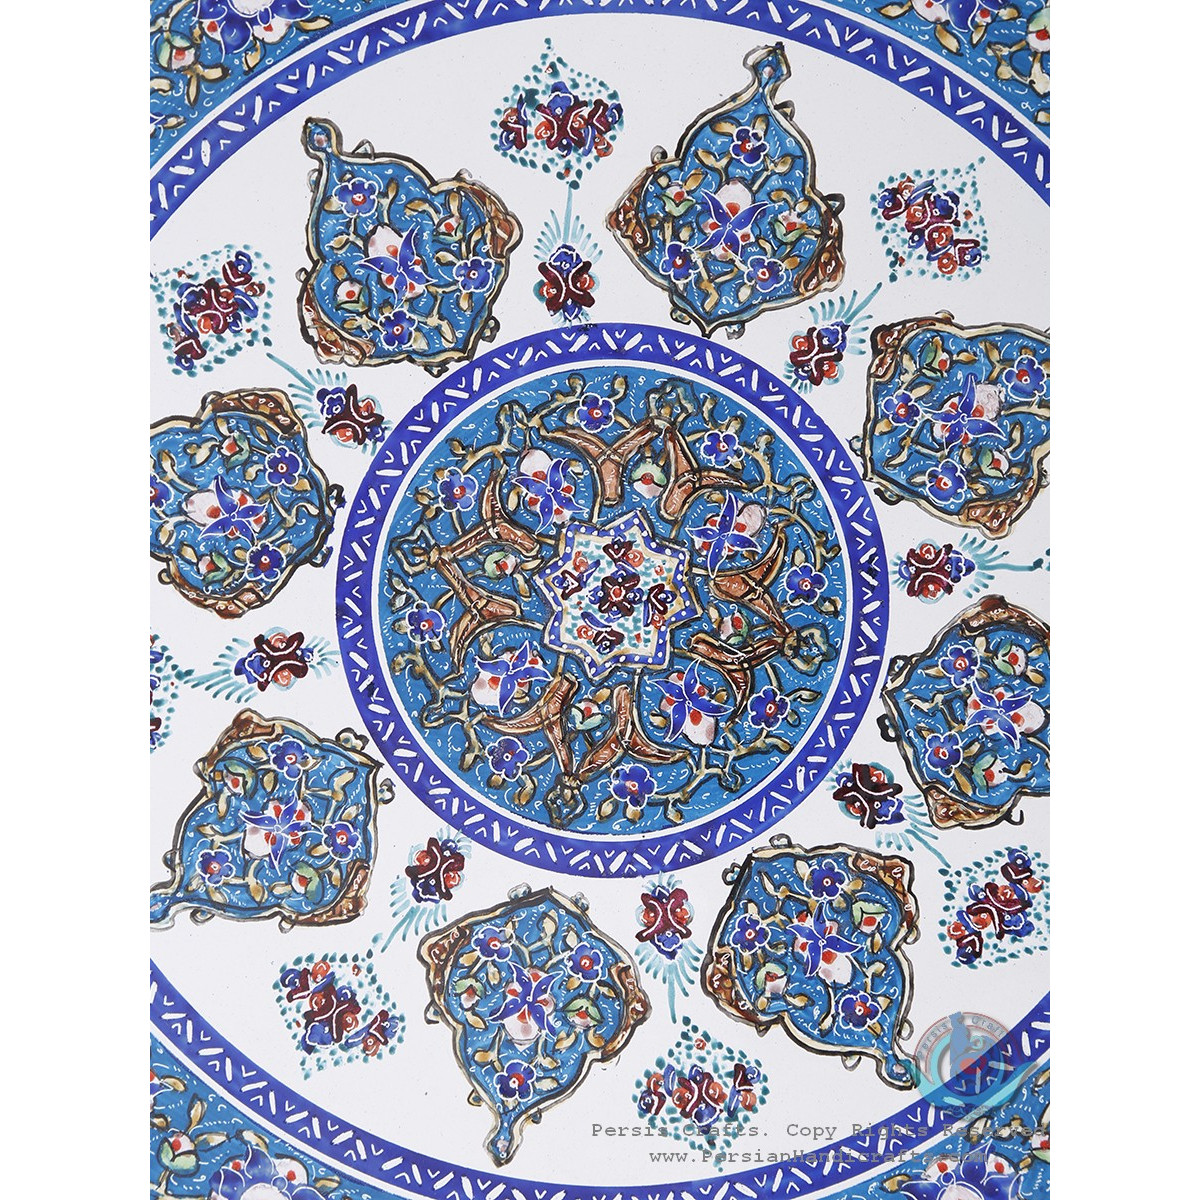 Enamel Eslimi Khatai Design Minakari Wall Plate - HE3906-Persian Handicrafts